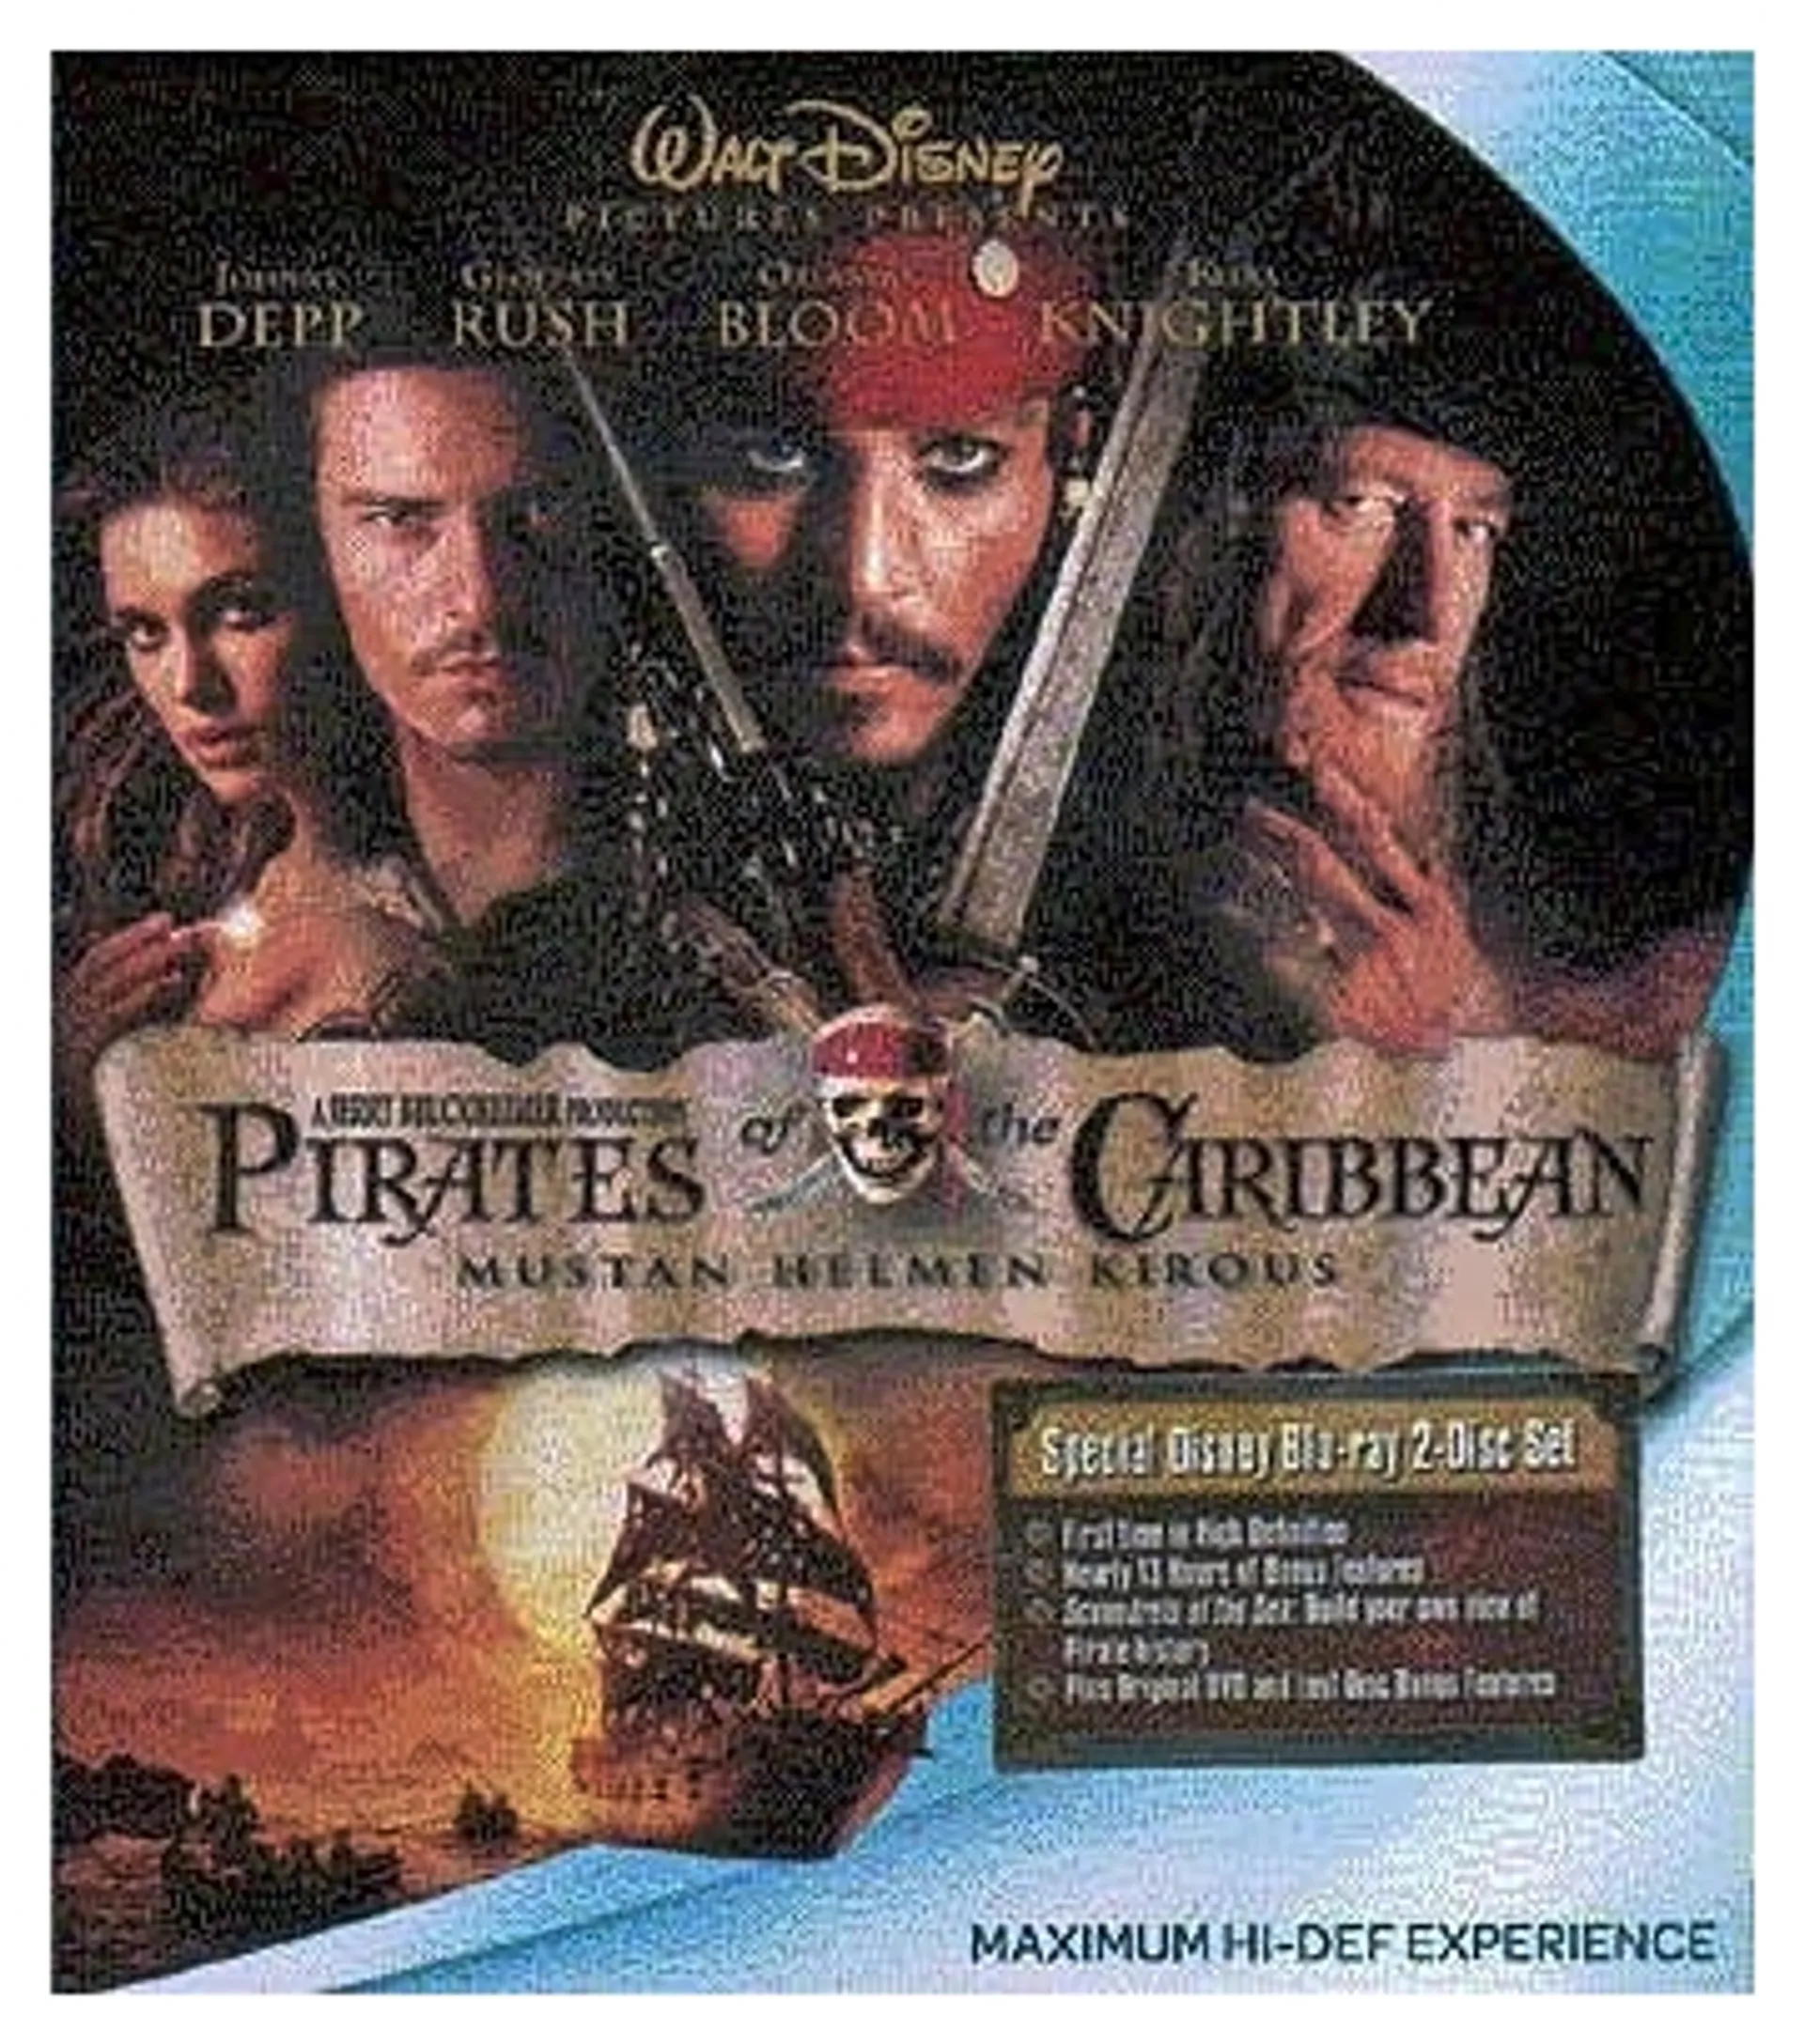 Pirates of the Caribbean - Mustan helmen kirous Blu-ray